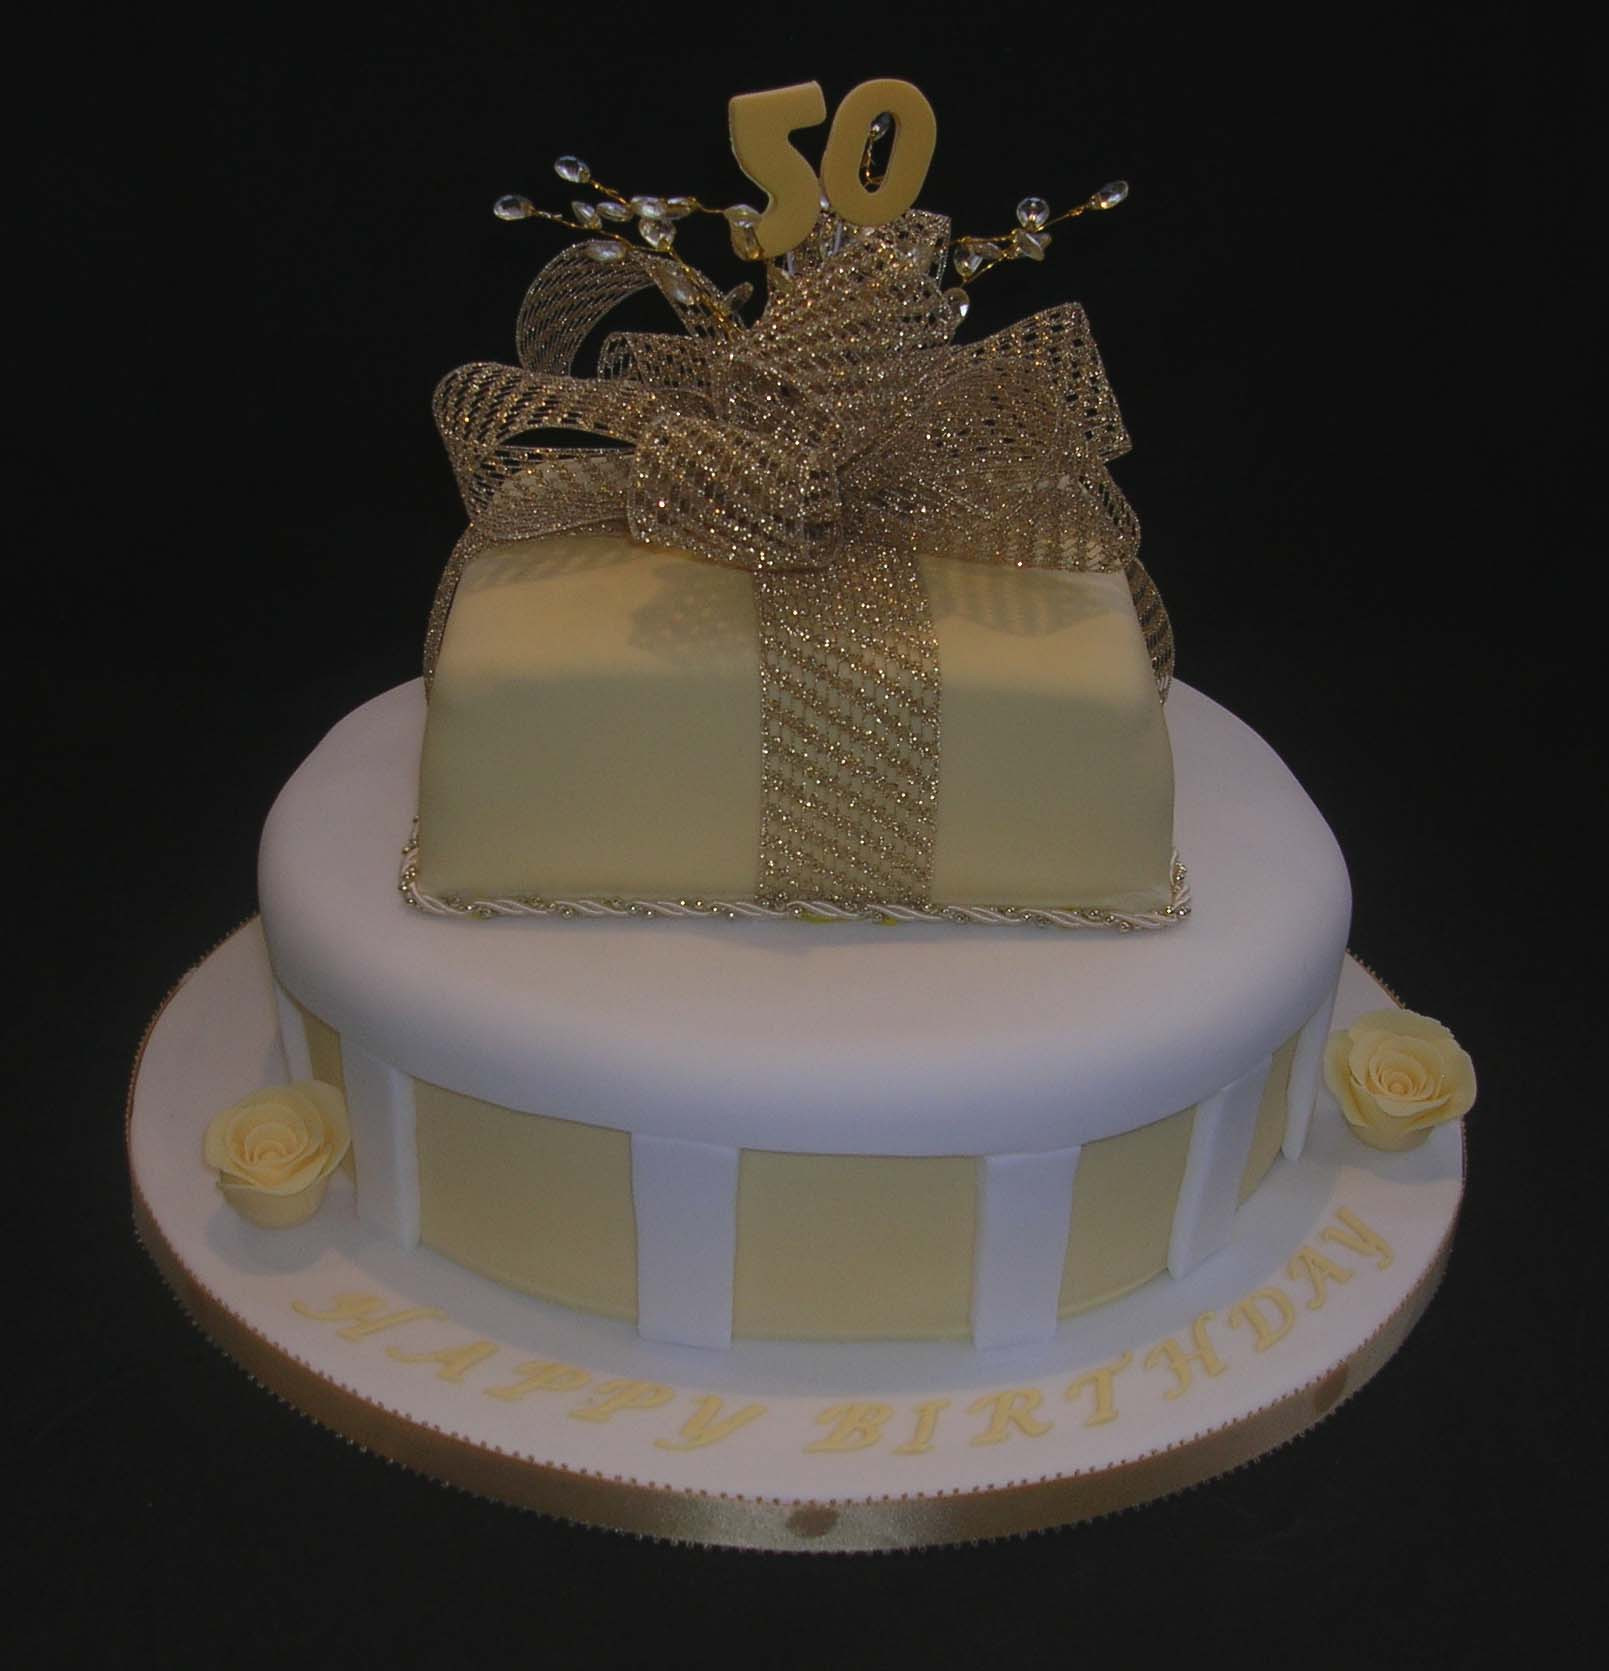 50th Birthday Cake Decorating Ideas
 50th birthday cake decorating ideas